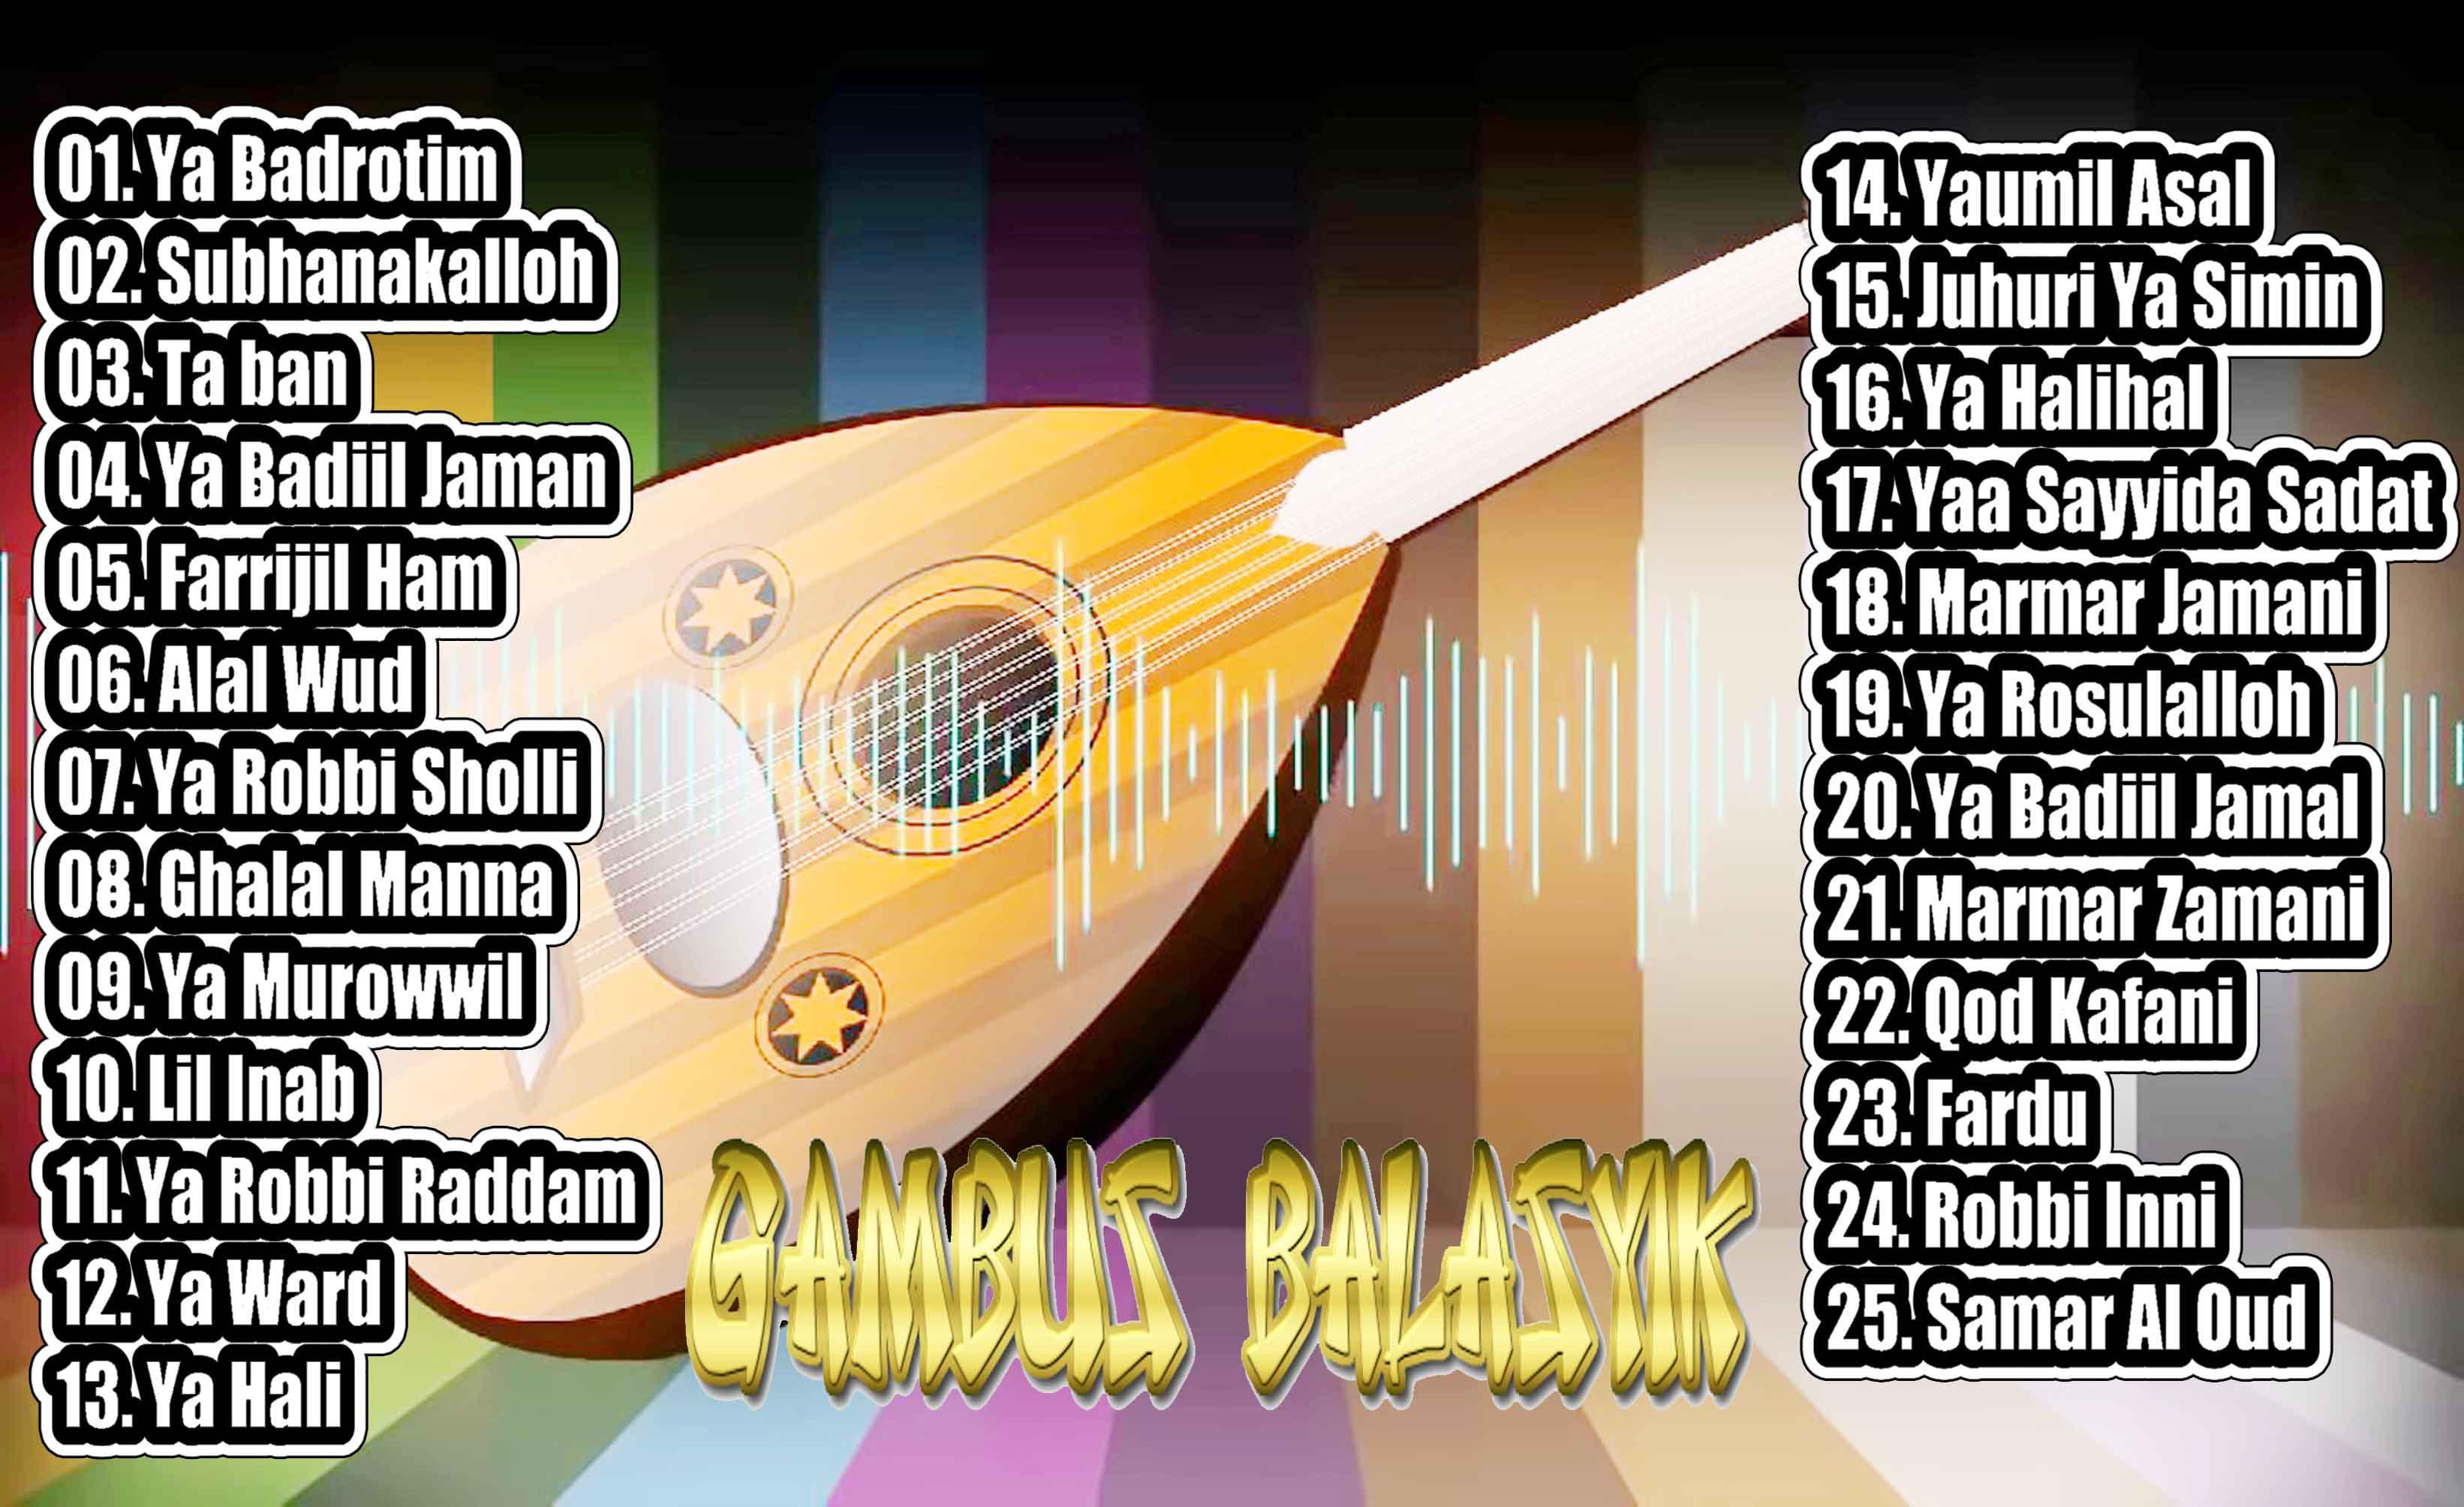 下载Qasidah Gambus Balasyik Mp3的安卓版本